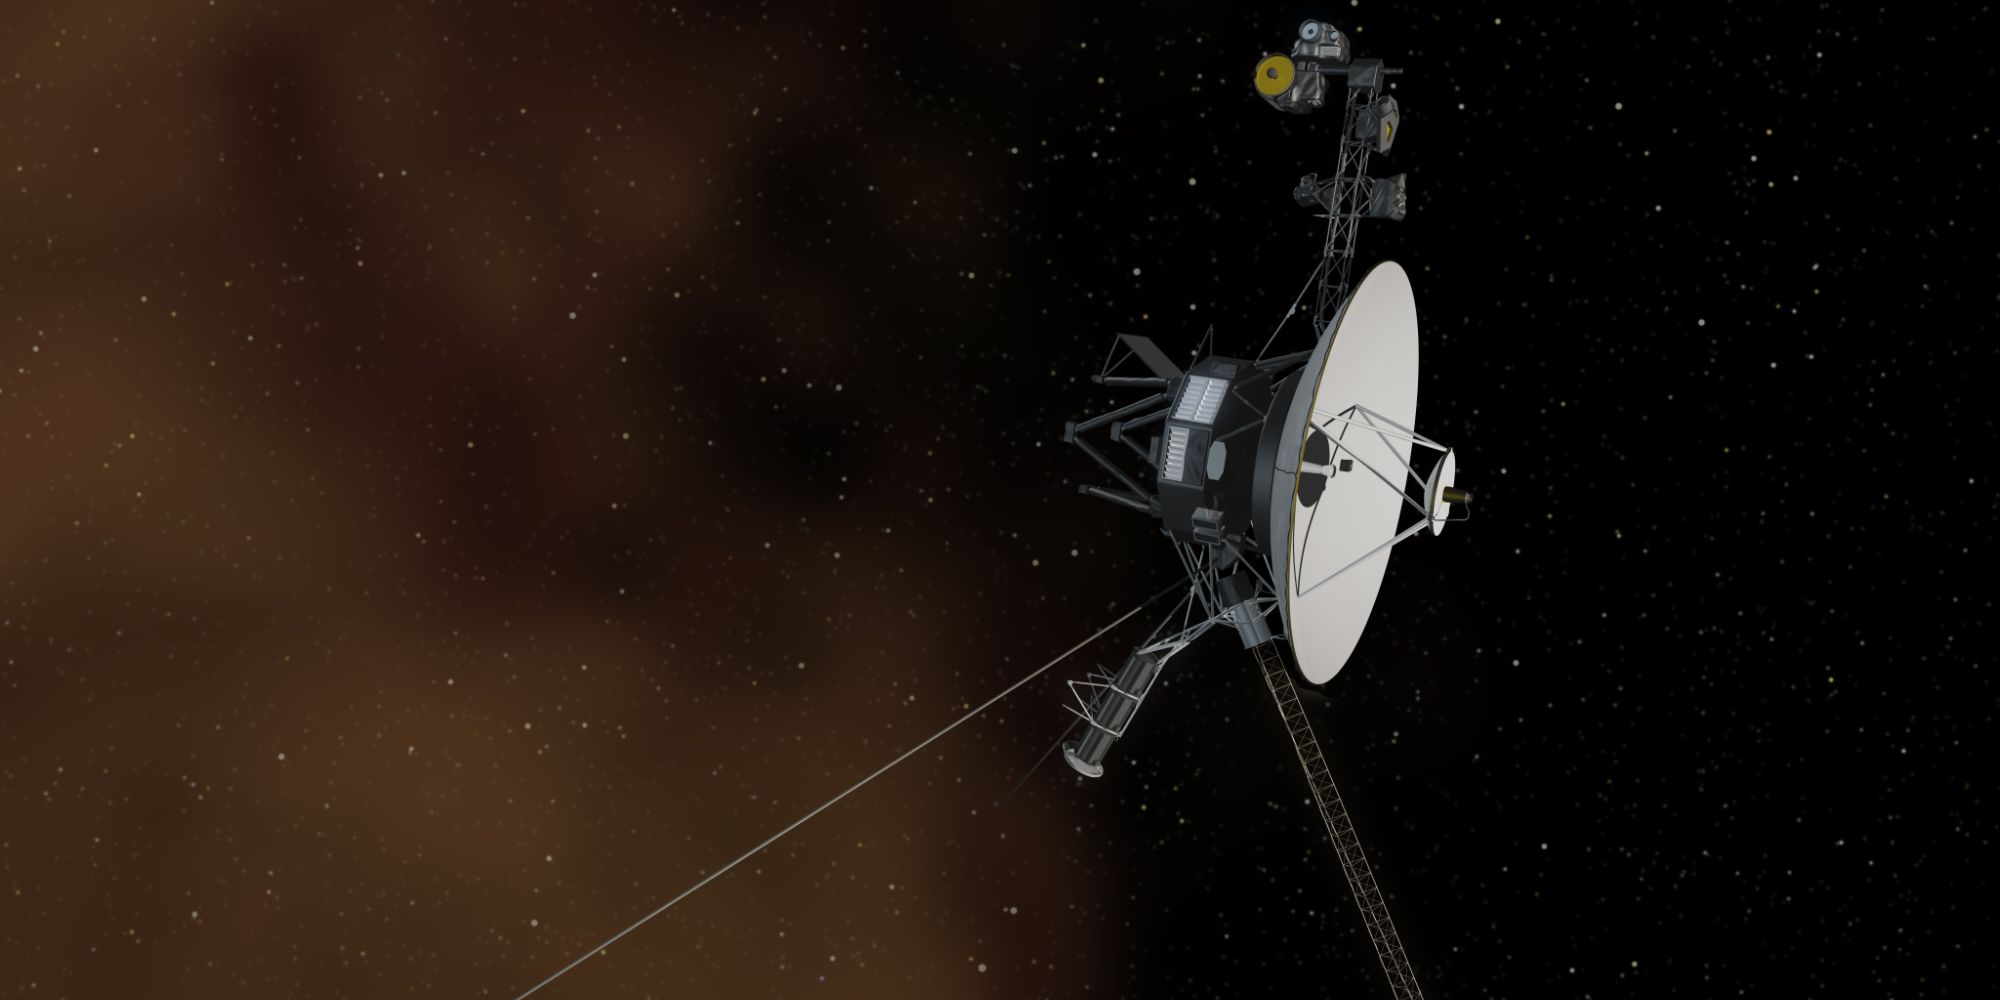 Artist render of NASA's Voyager 1